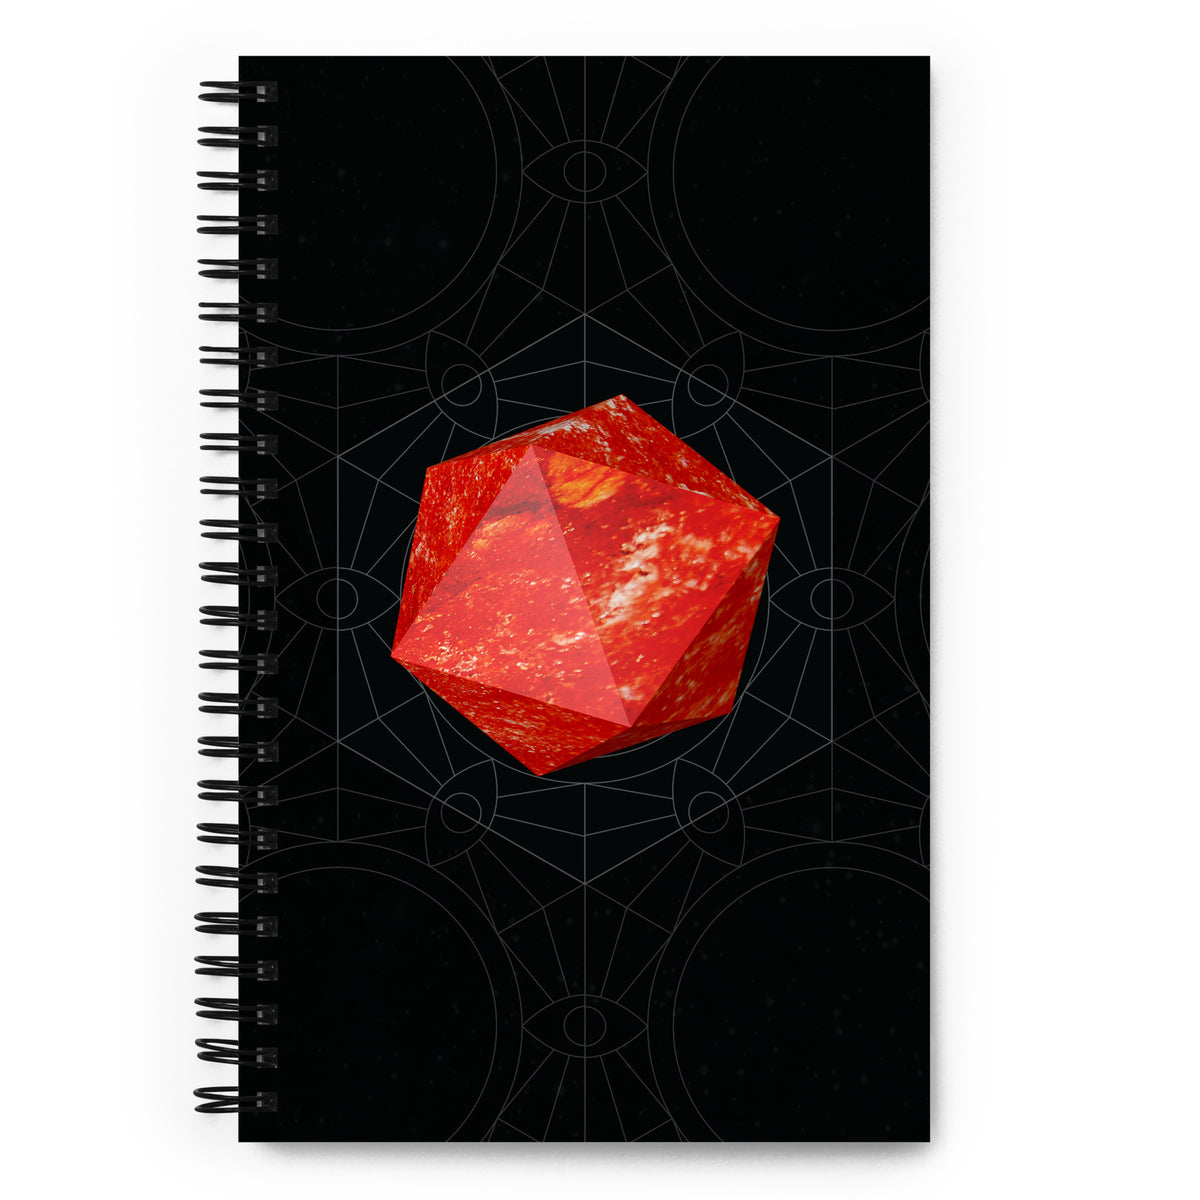 Red Jade Journal